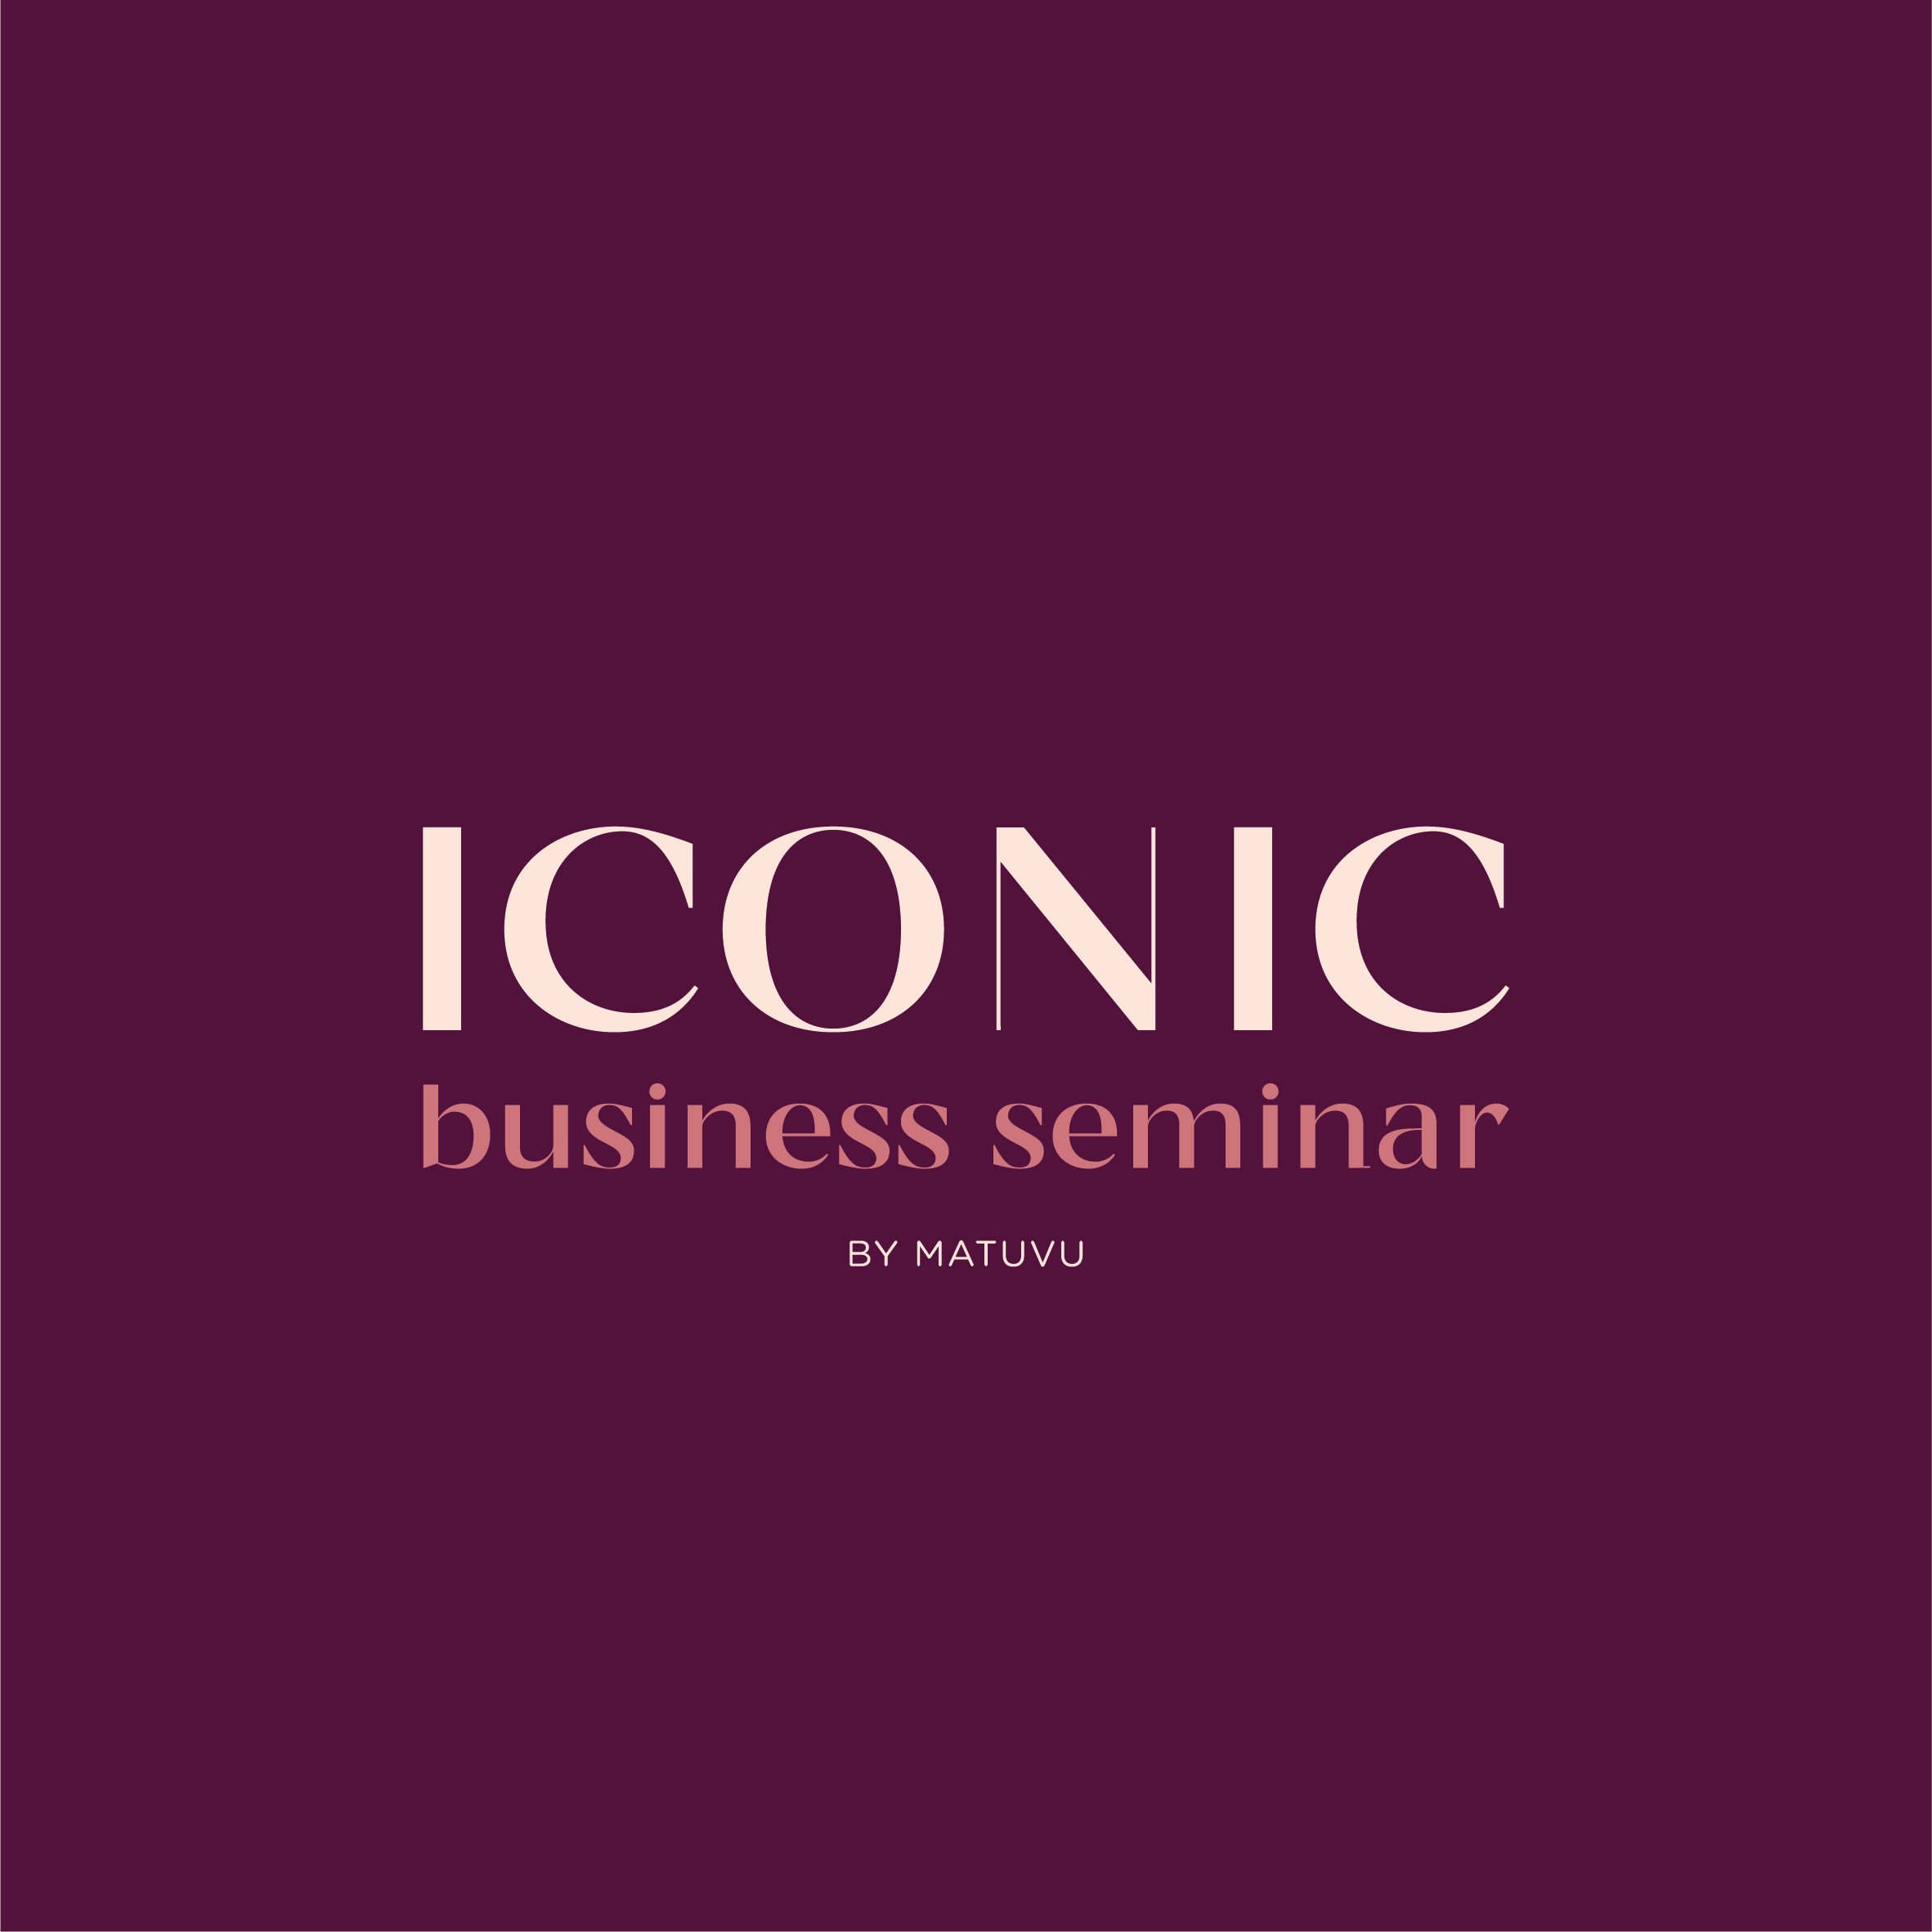 ICONIC business seminar